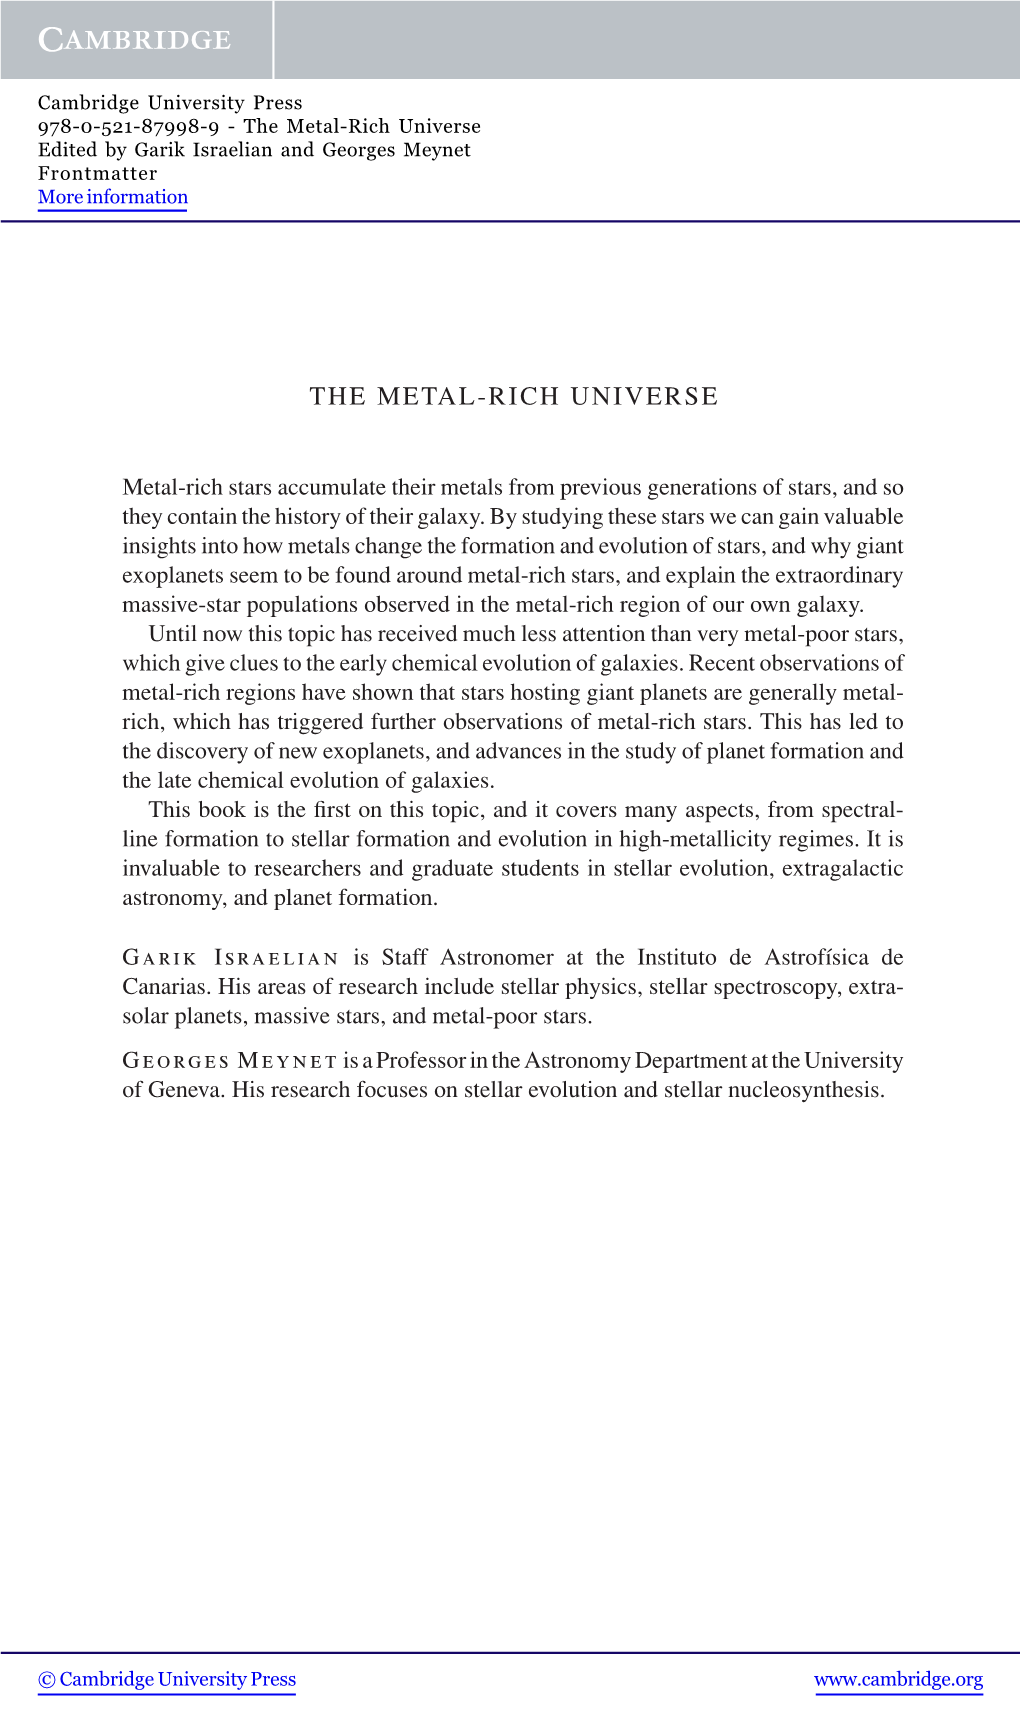 The Metal-Rich Universe Edited by Garik Israelian and Georges Meynet Frontmatter More Information